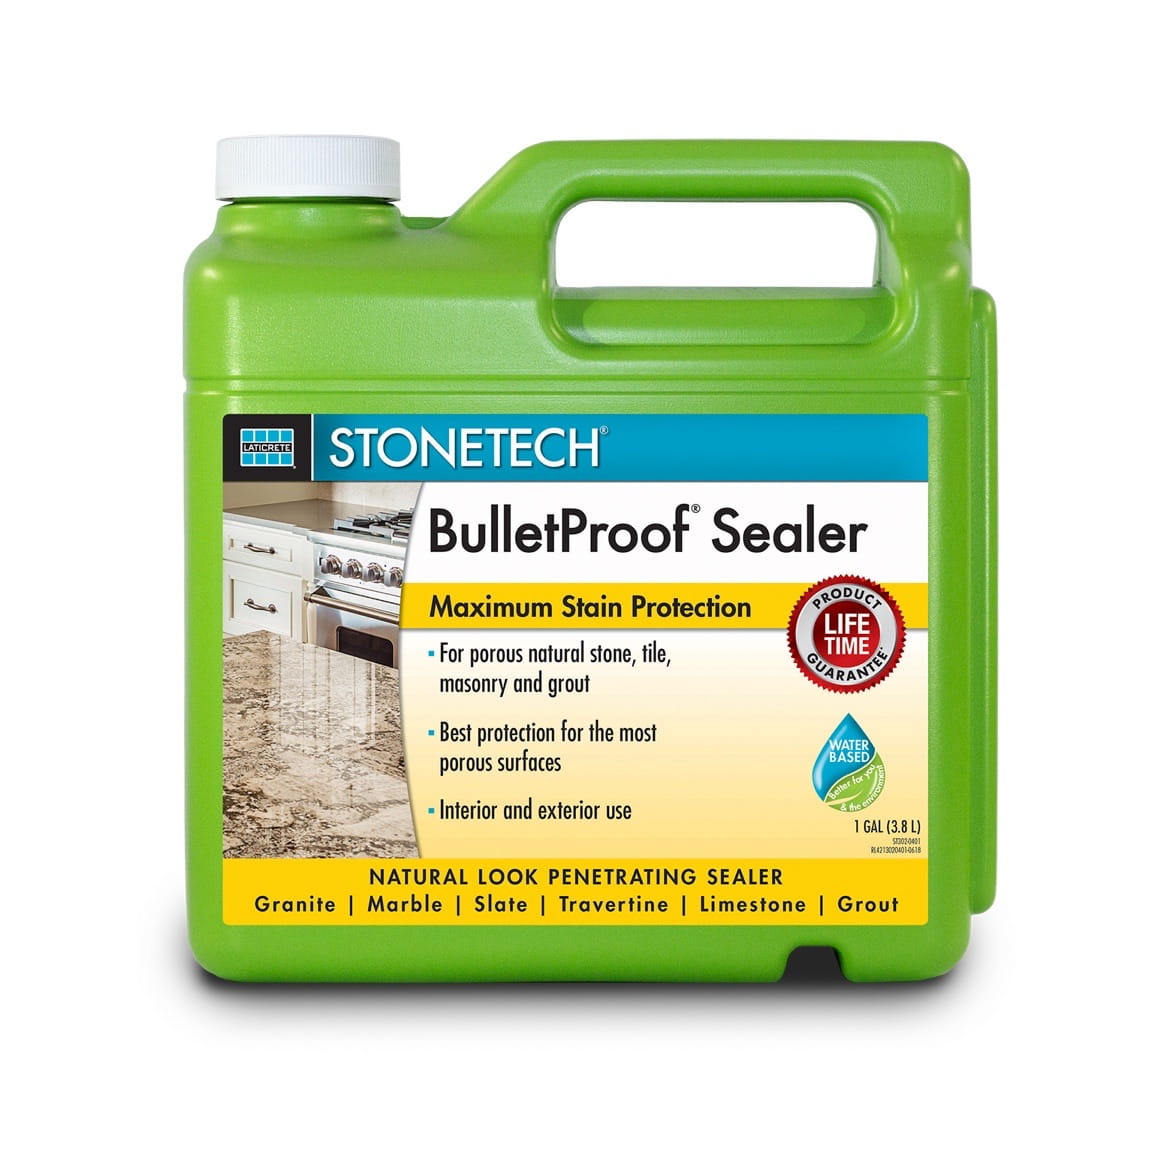 Stonetech bulletproof sealer